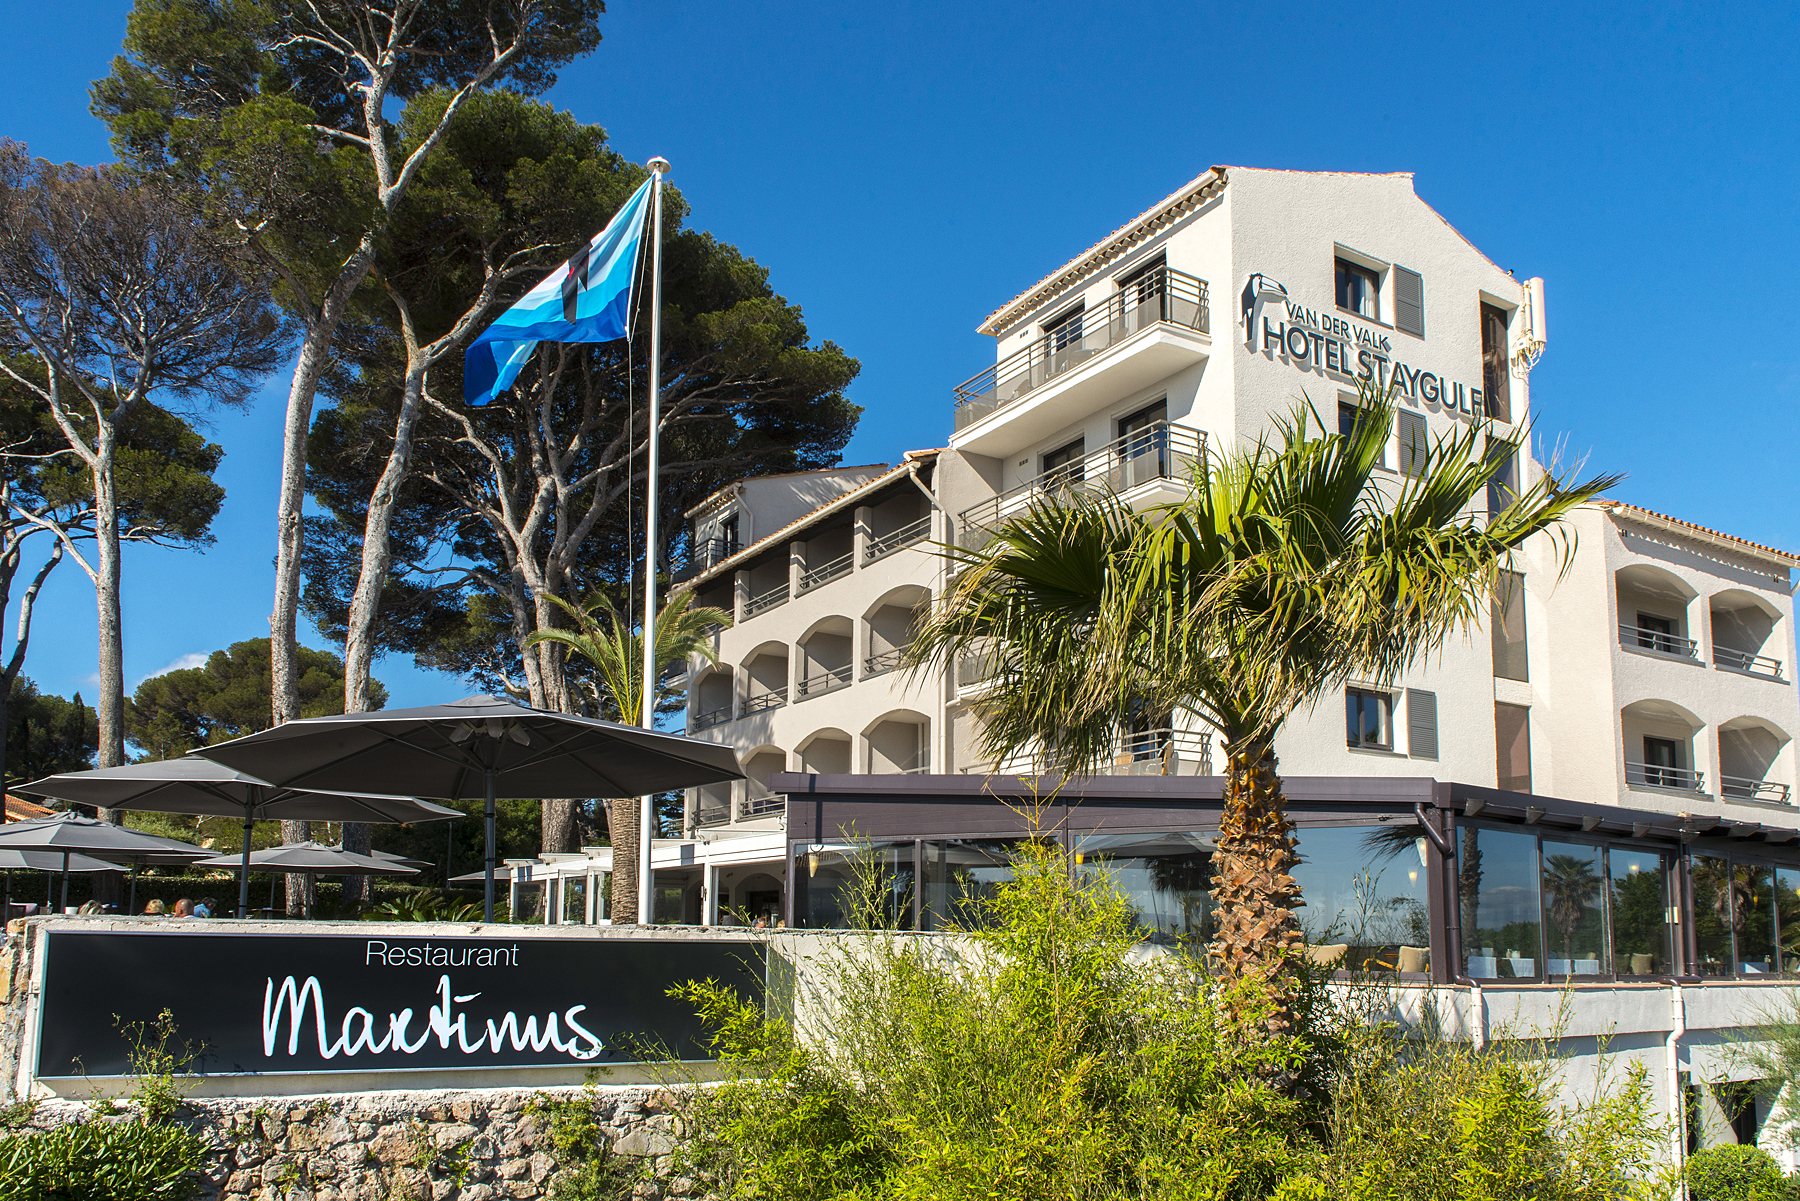 Hotel Saint - Aygulf - Cote d Azur